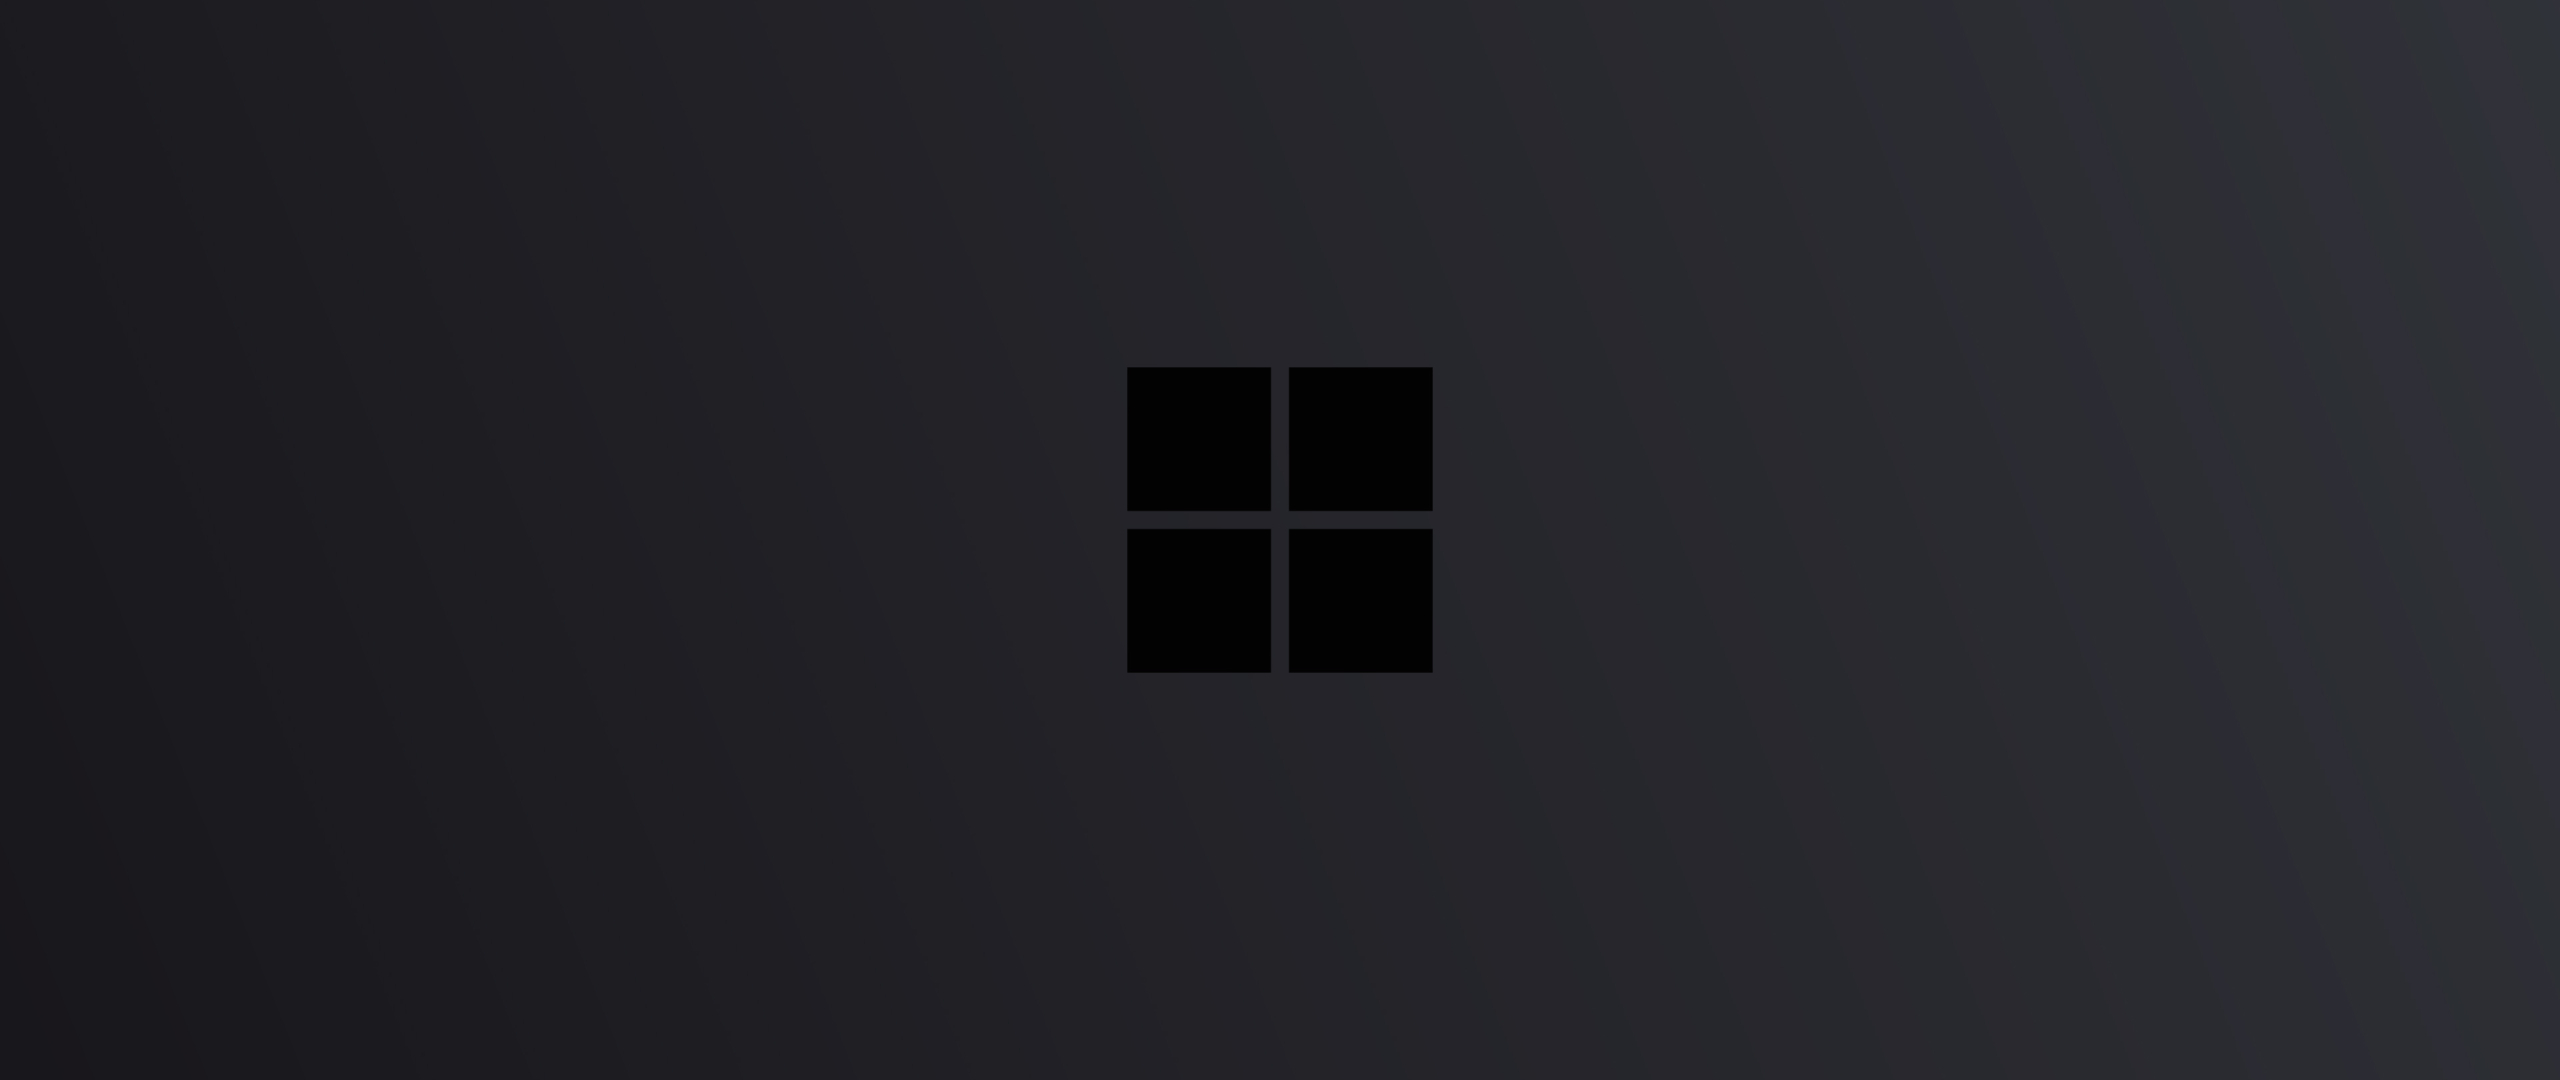 2560x1080 Resolution Windows 10 Logo Minimal Dark 2560x1080 Resolution ...